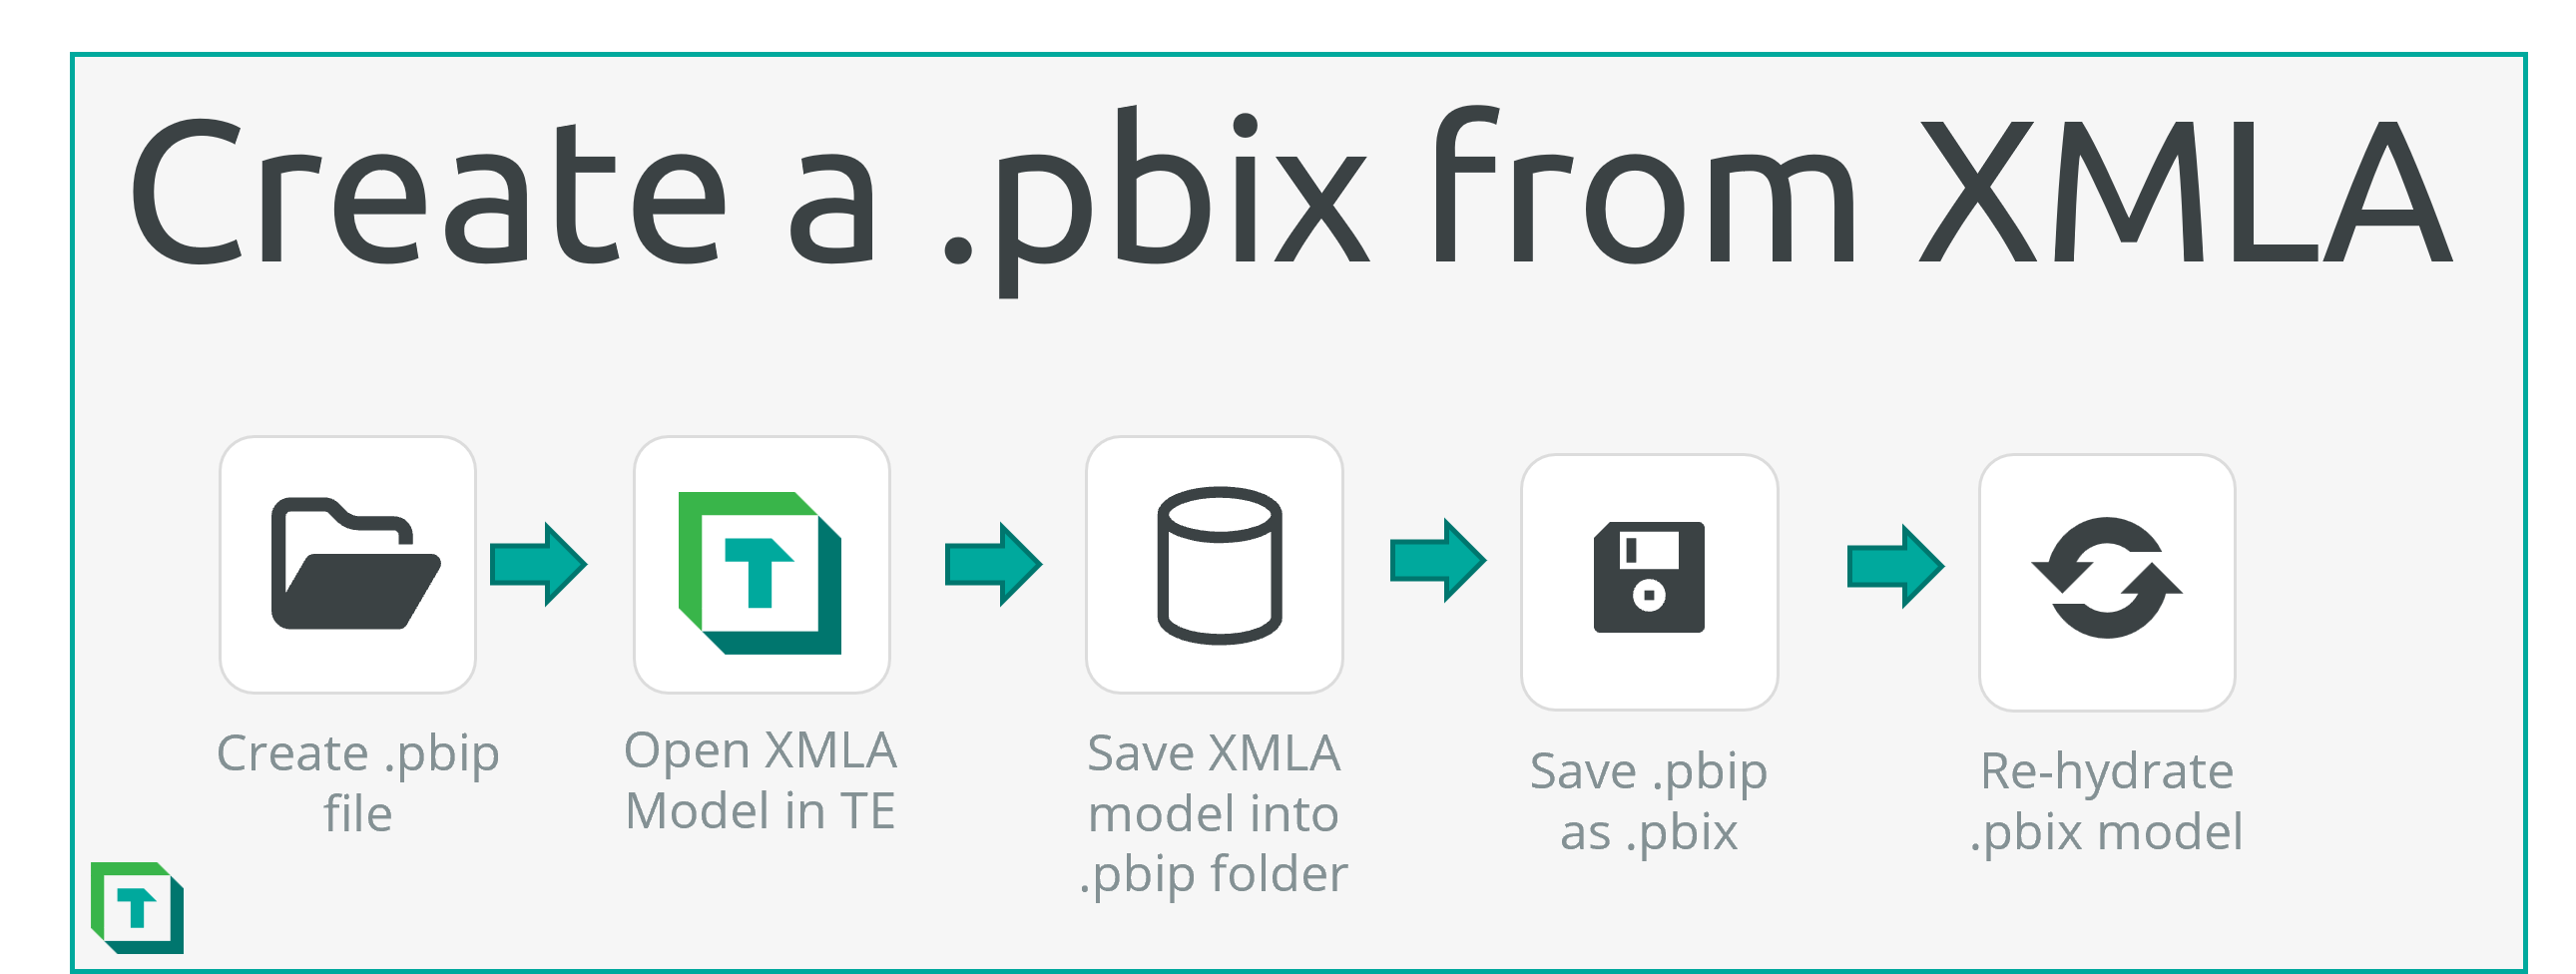 XLMA to PBIX Overview